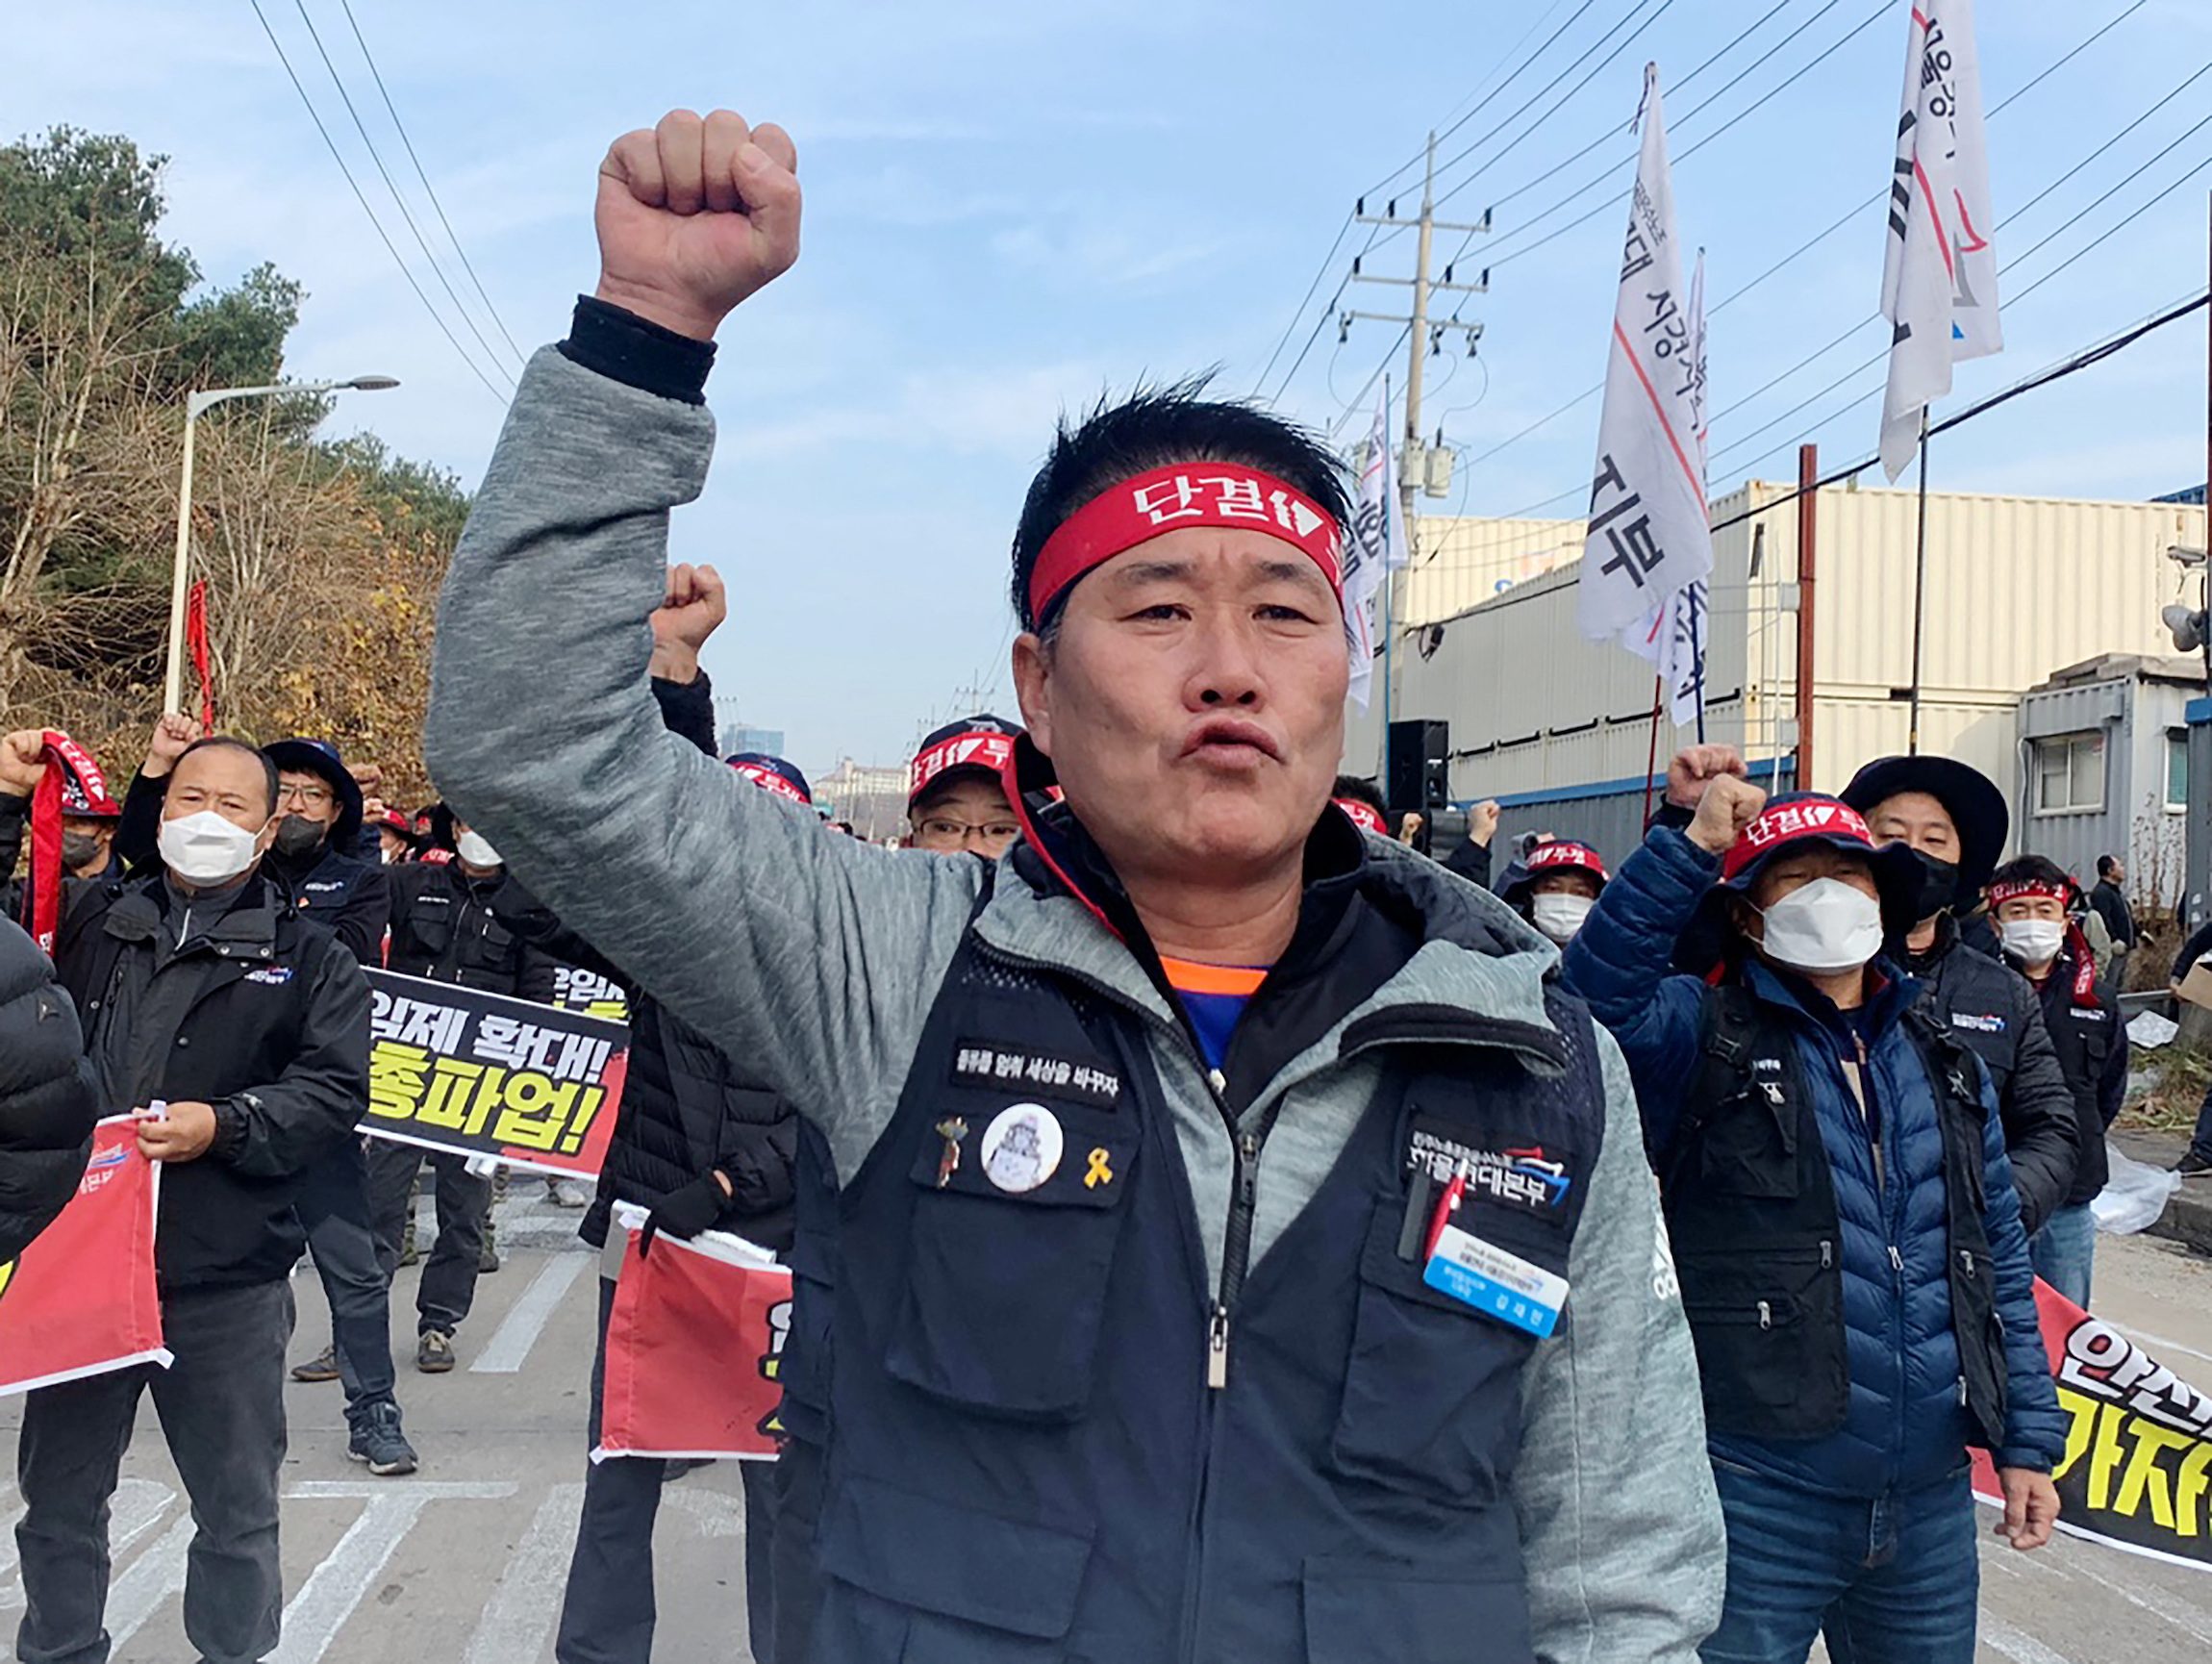 South Korea’s President Yoon warns of crackdown on striking truckers